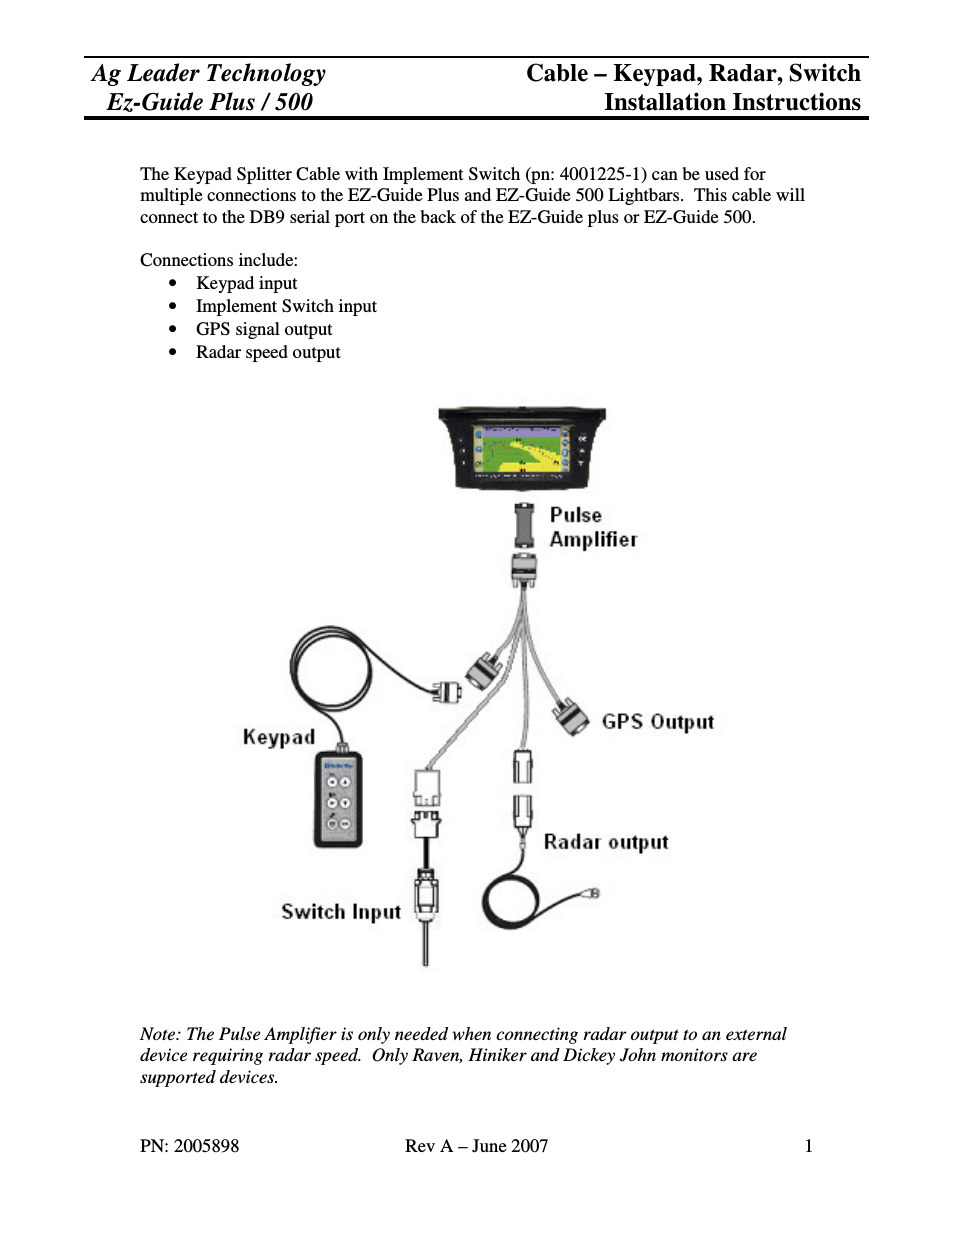 EZ-Guide Plus Cable – Keypad, Radar, Switch Installation